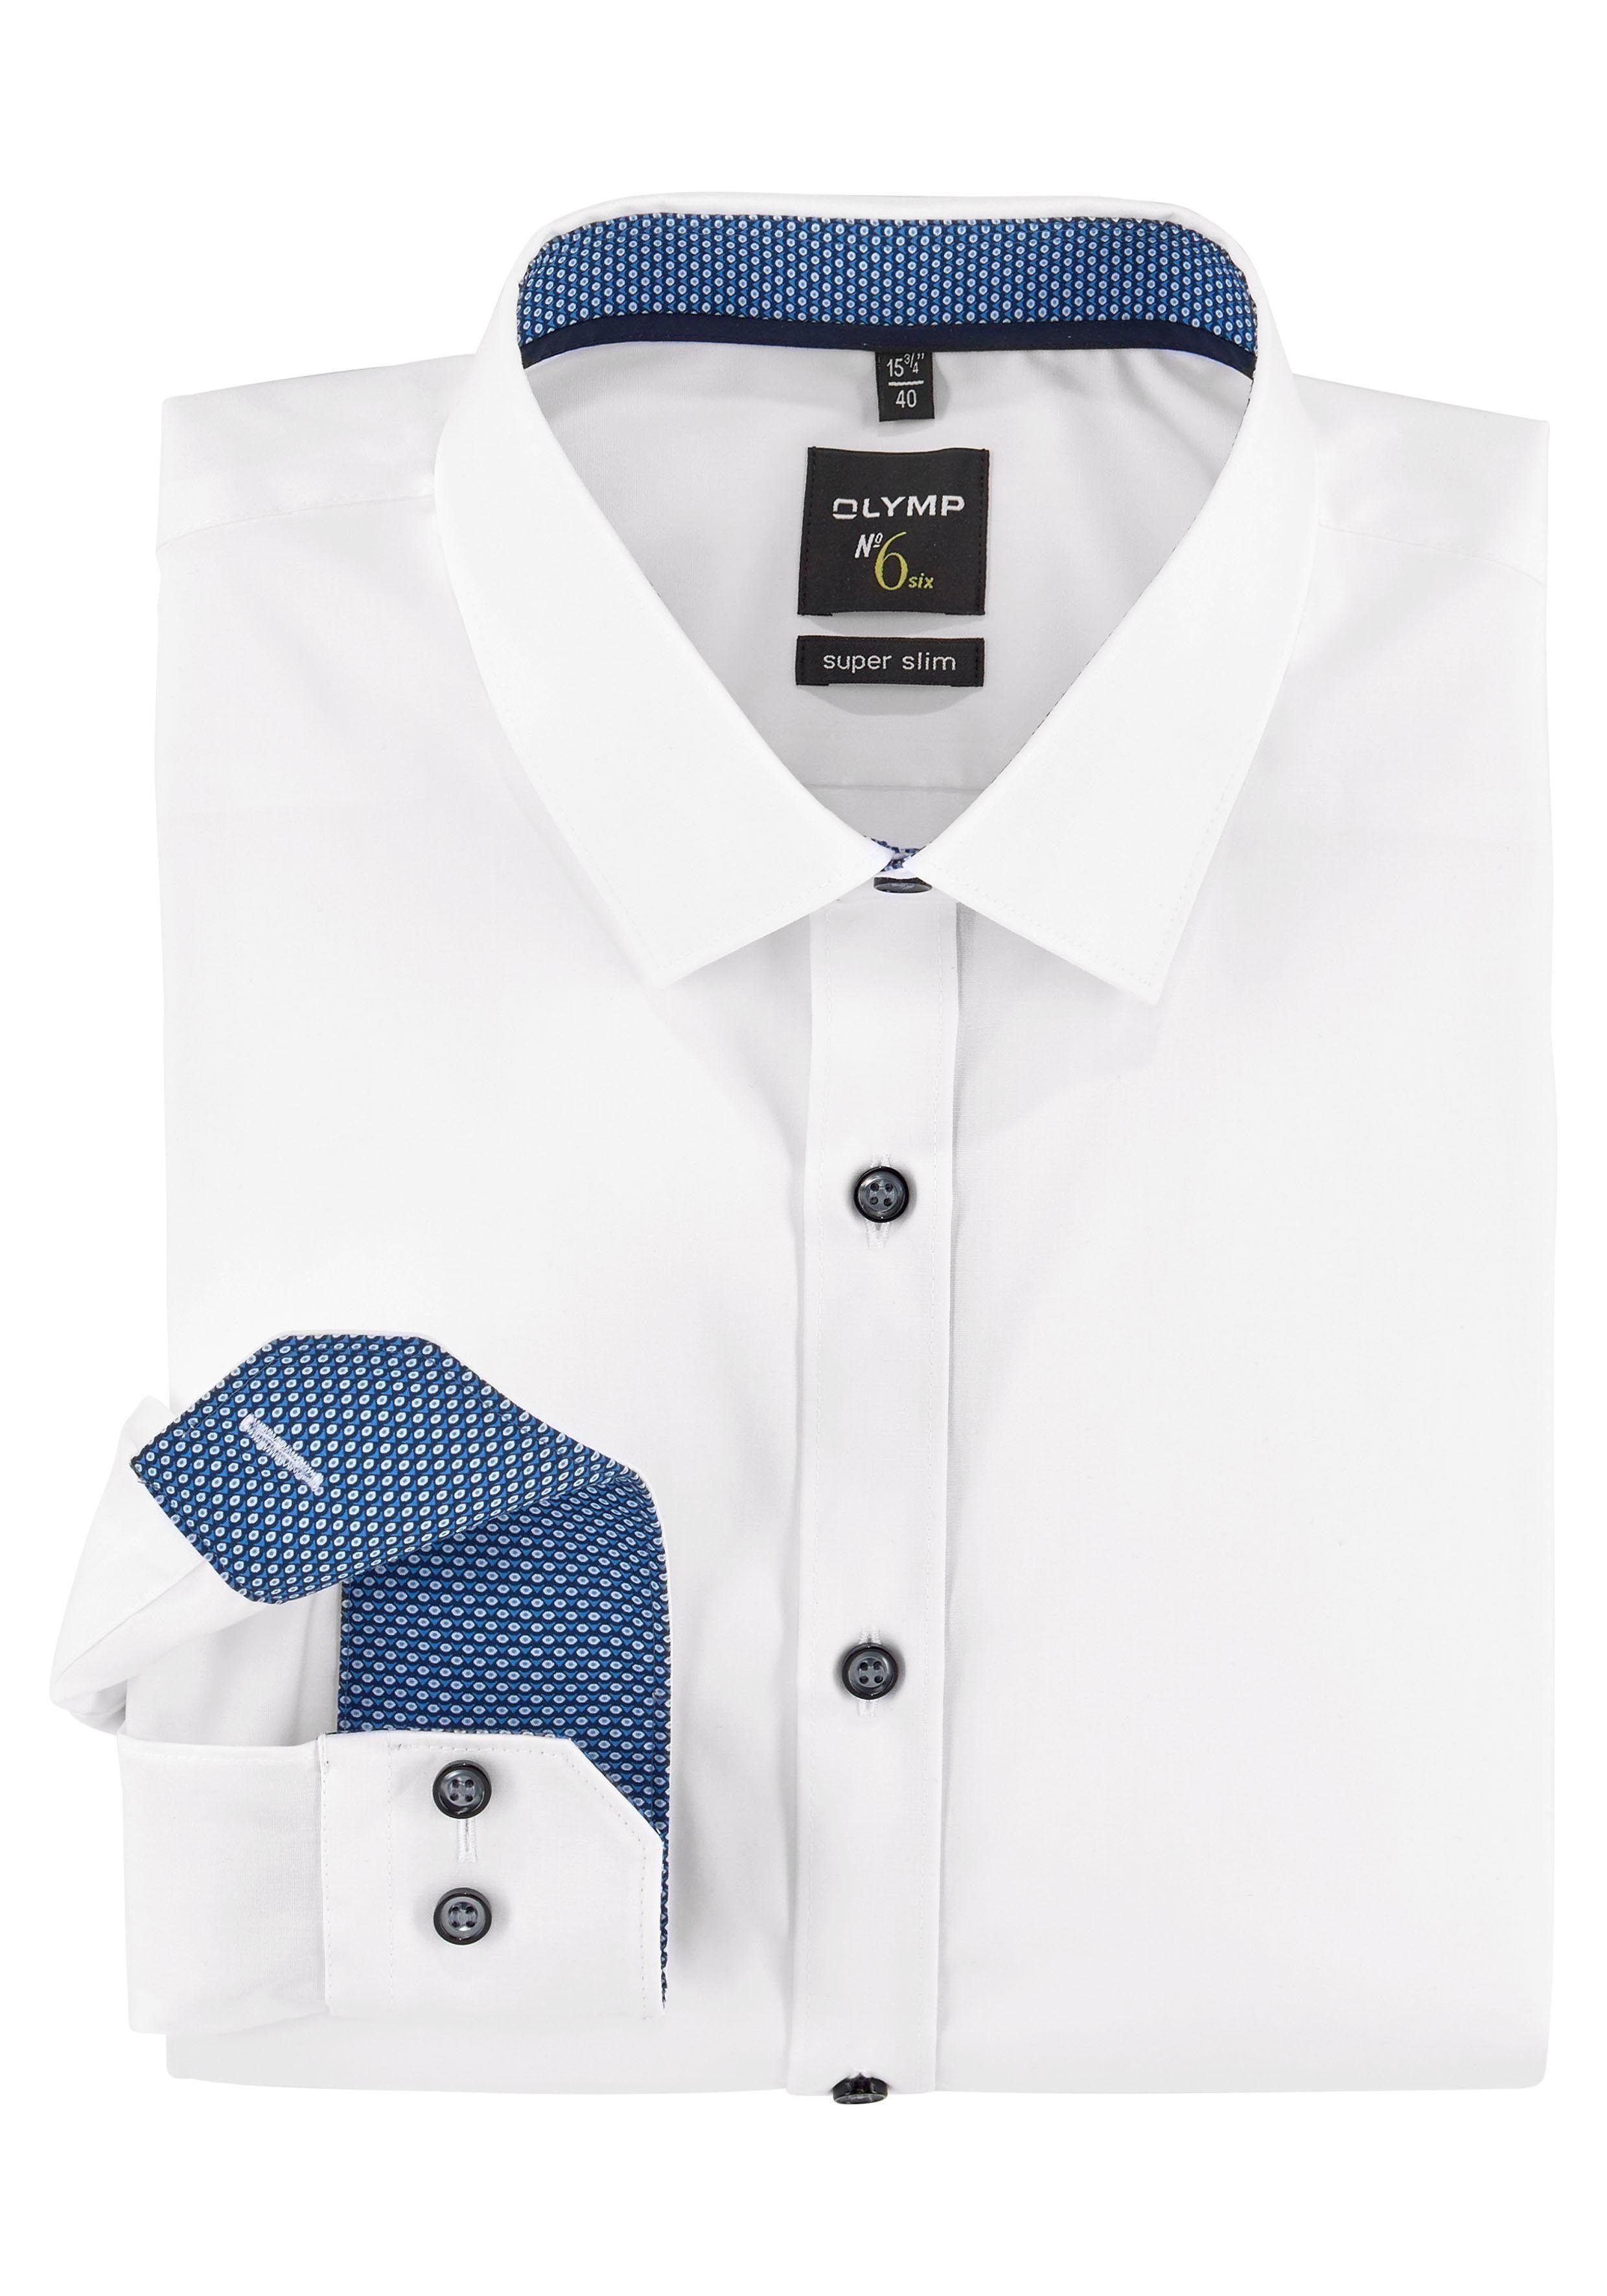 super slim weiß-blau-kontrastfarbene Six No. OLYMP Businesshemd Details